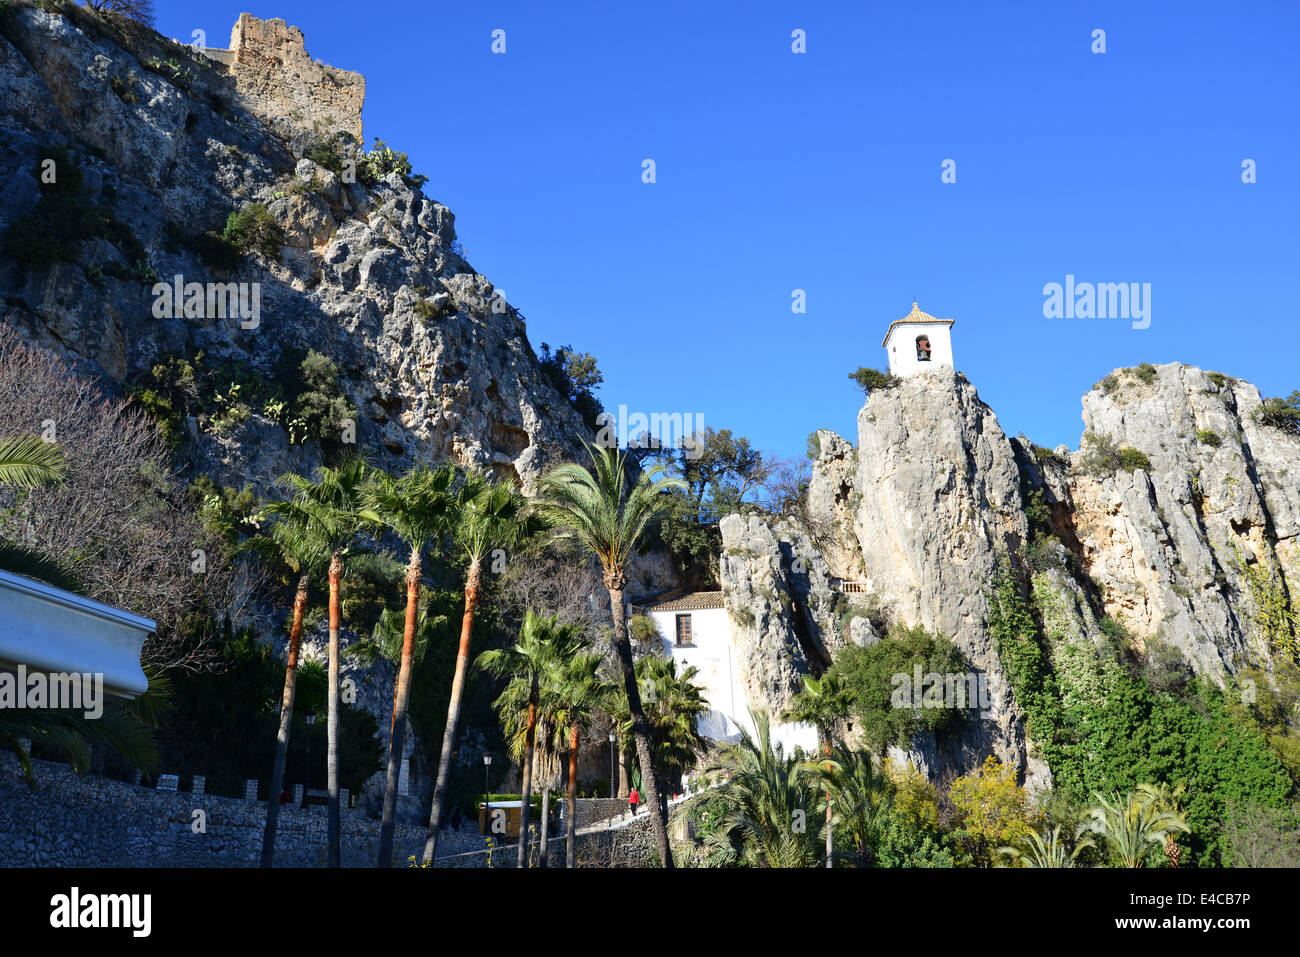 Mountain of Guadalest, El Castell de Guadalest, Marina Baixa, Alicante Province, Kingdom of Spain Stock Photo